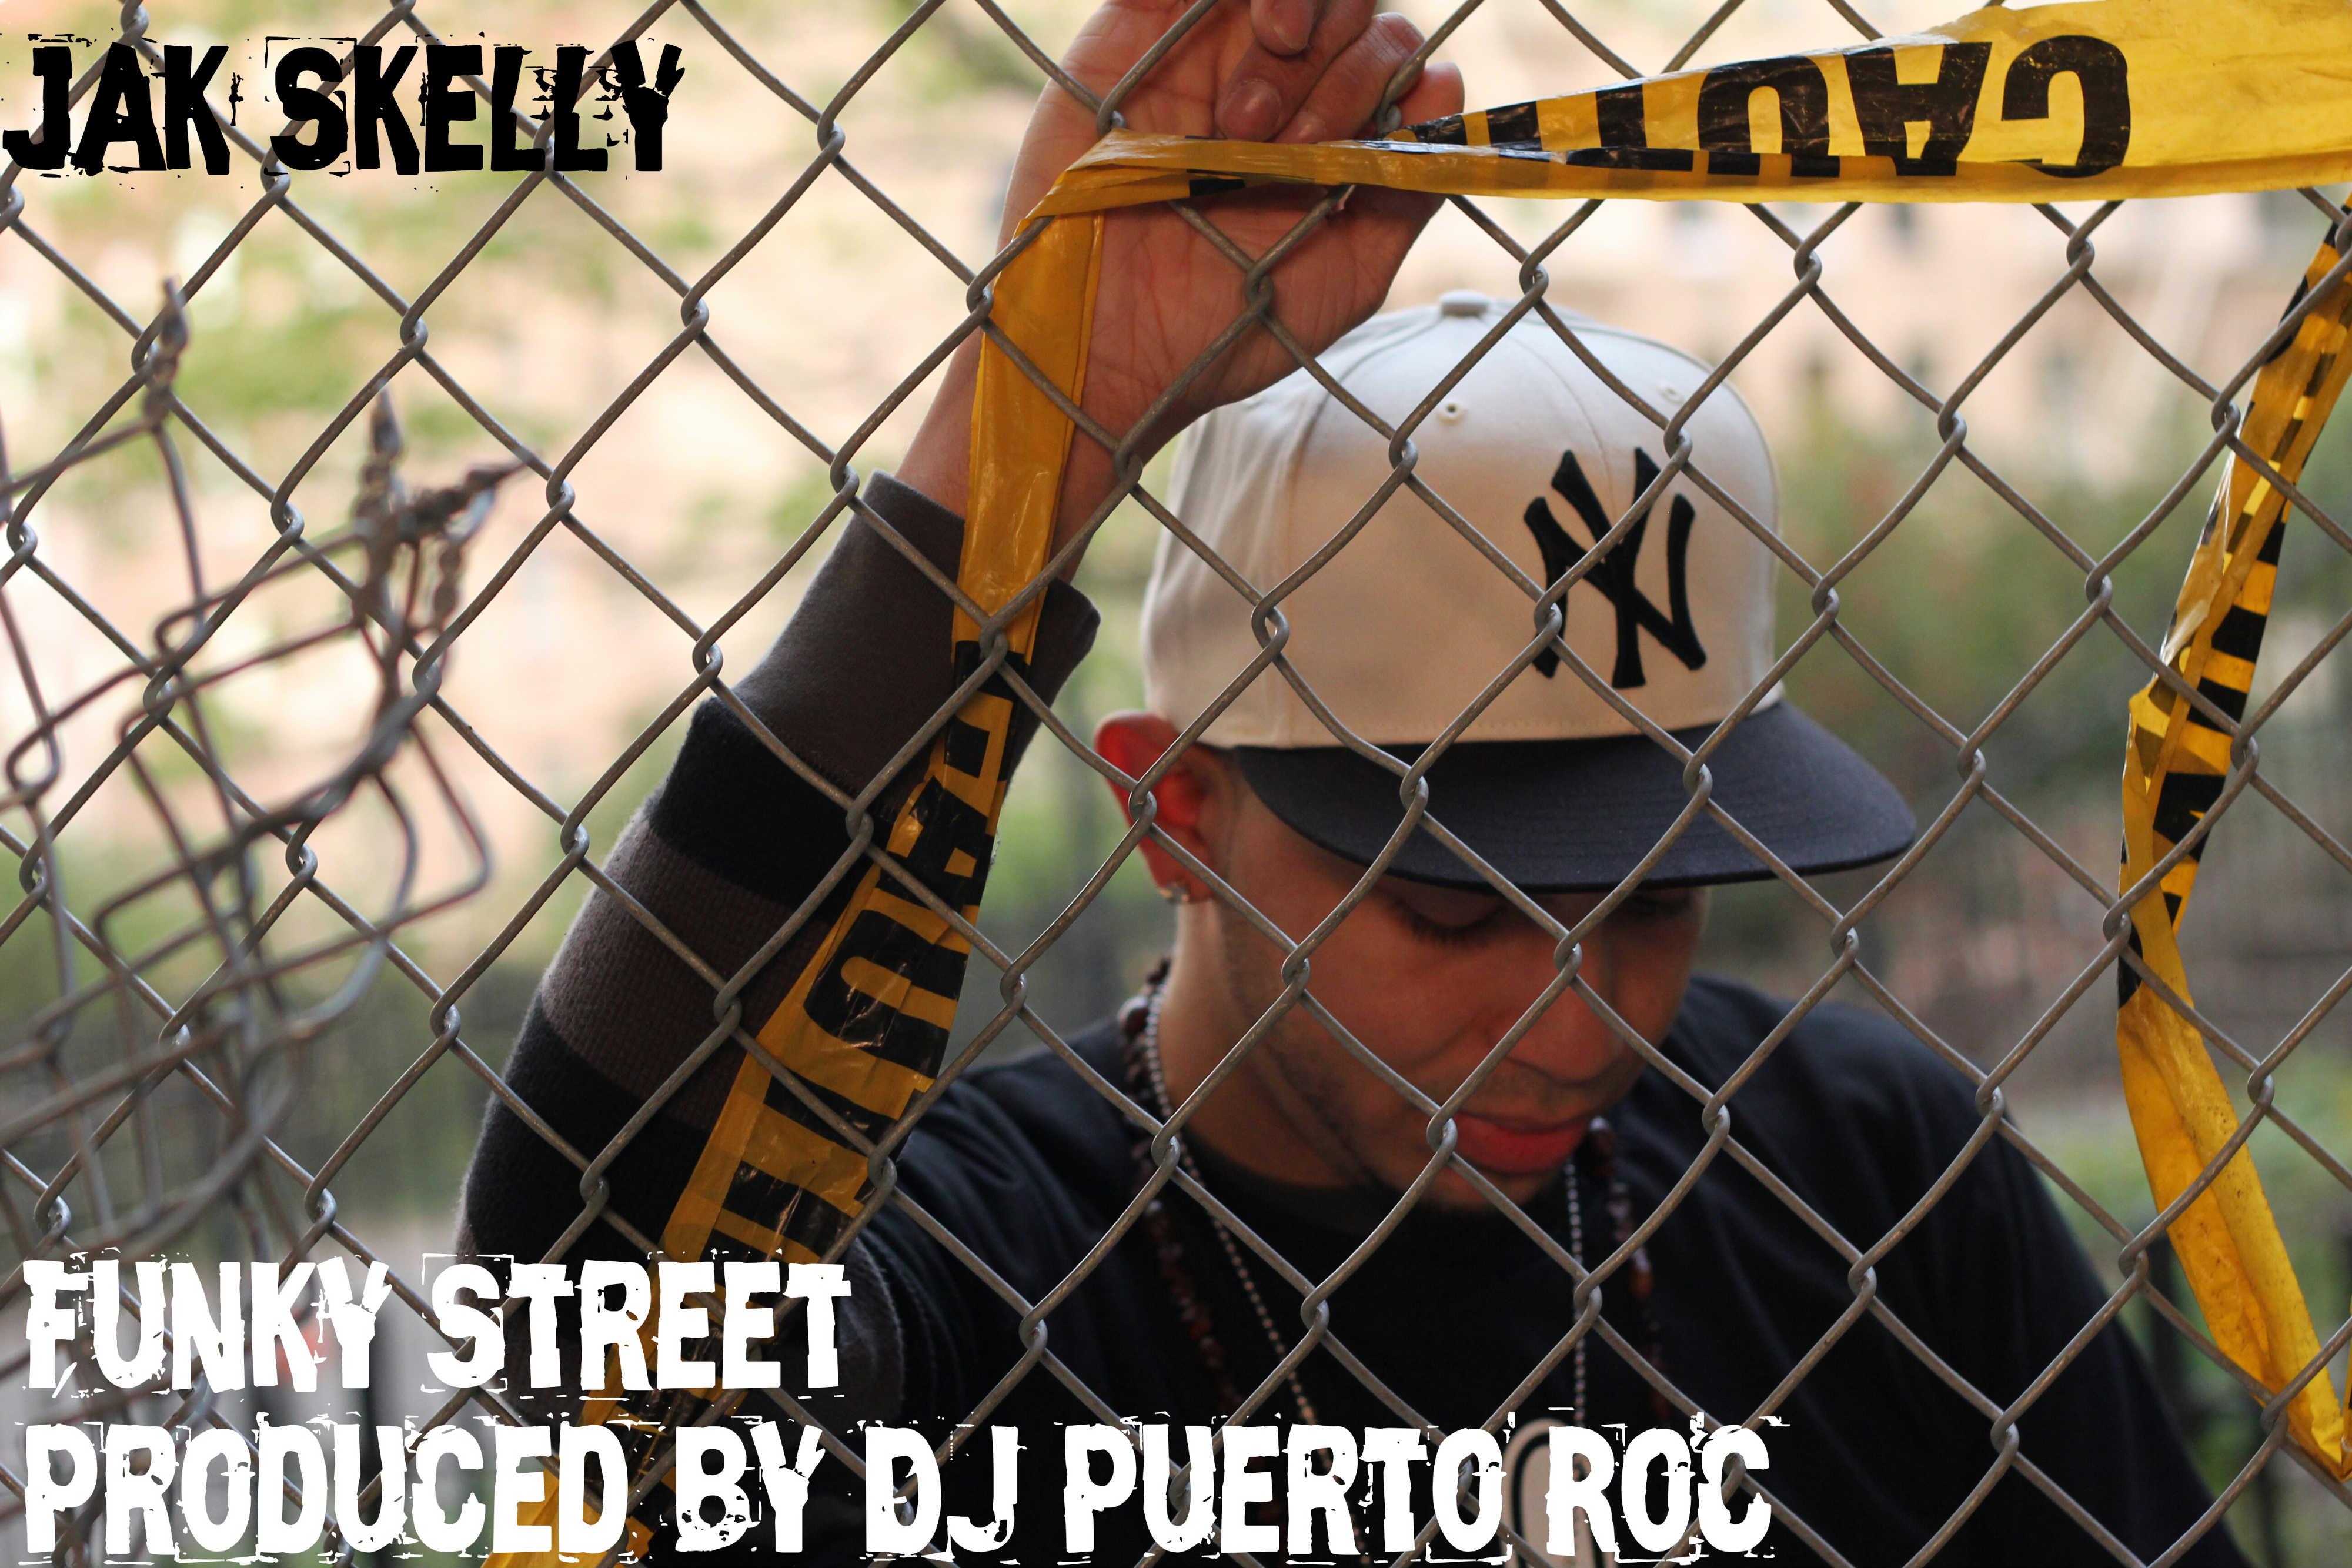 Jak Skelly "Funky Street" | @JakSkellyMusic